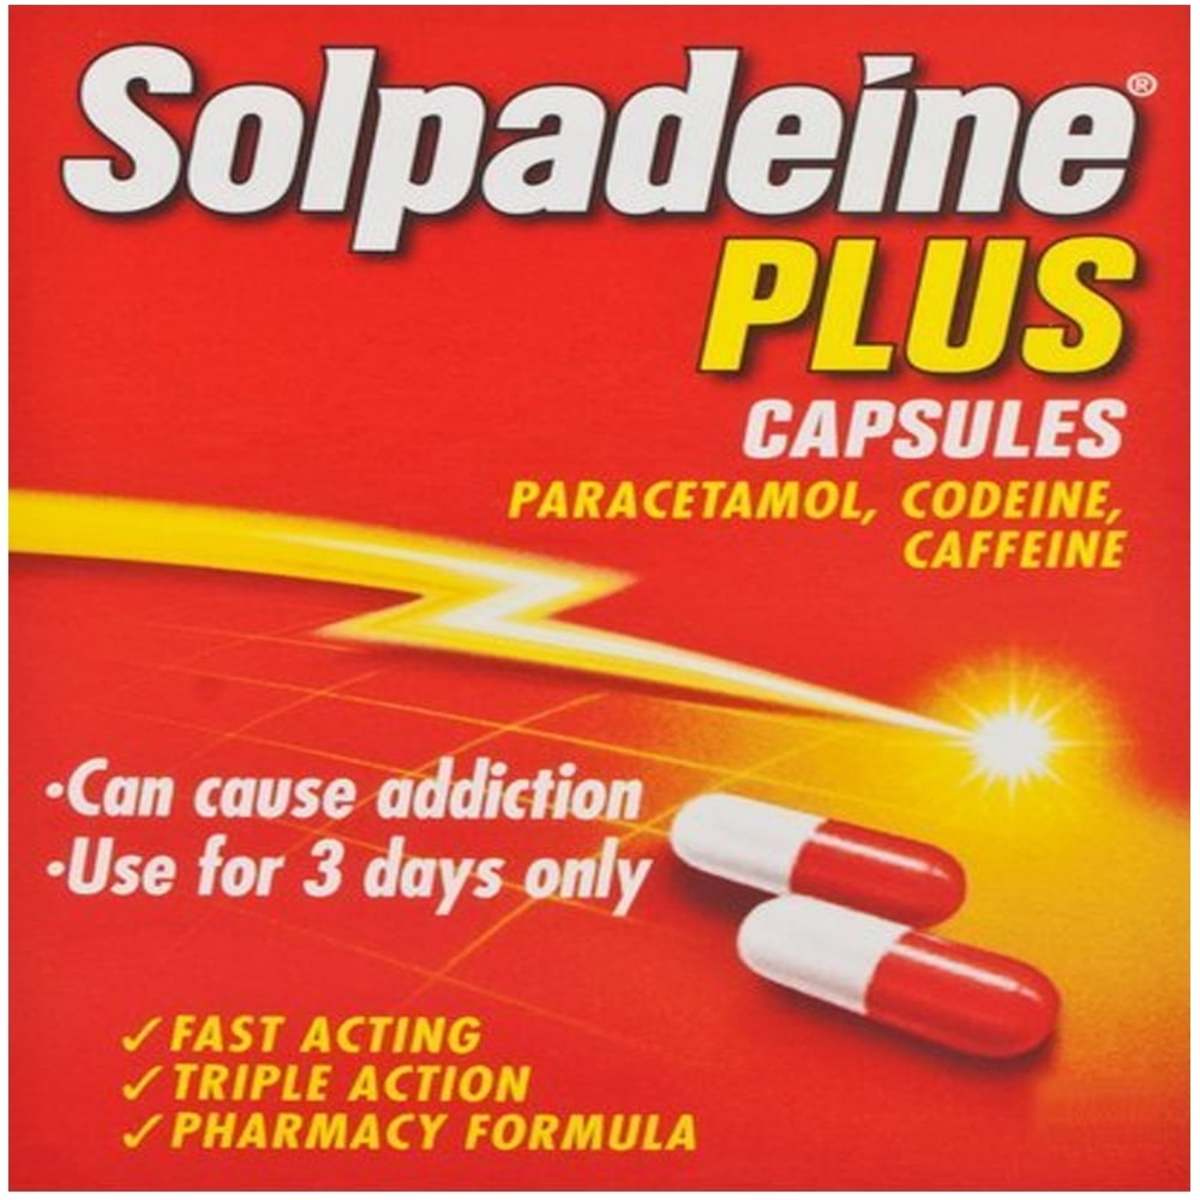 Each tablet contains Codeine phosphate hemihydrate 12.8 mg.and Paracetamol/ acetaminophen 500 mg  